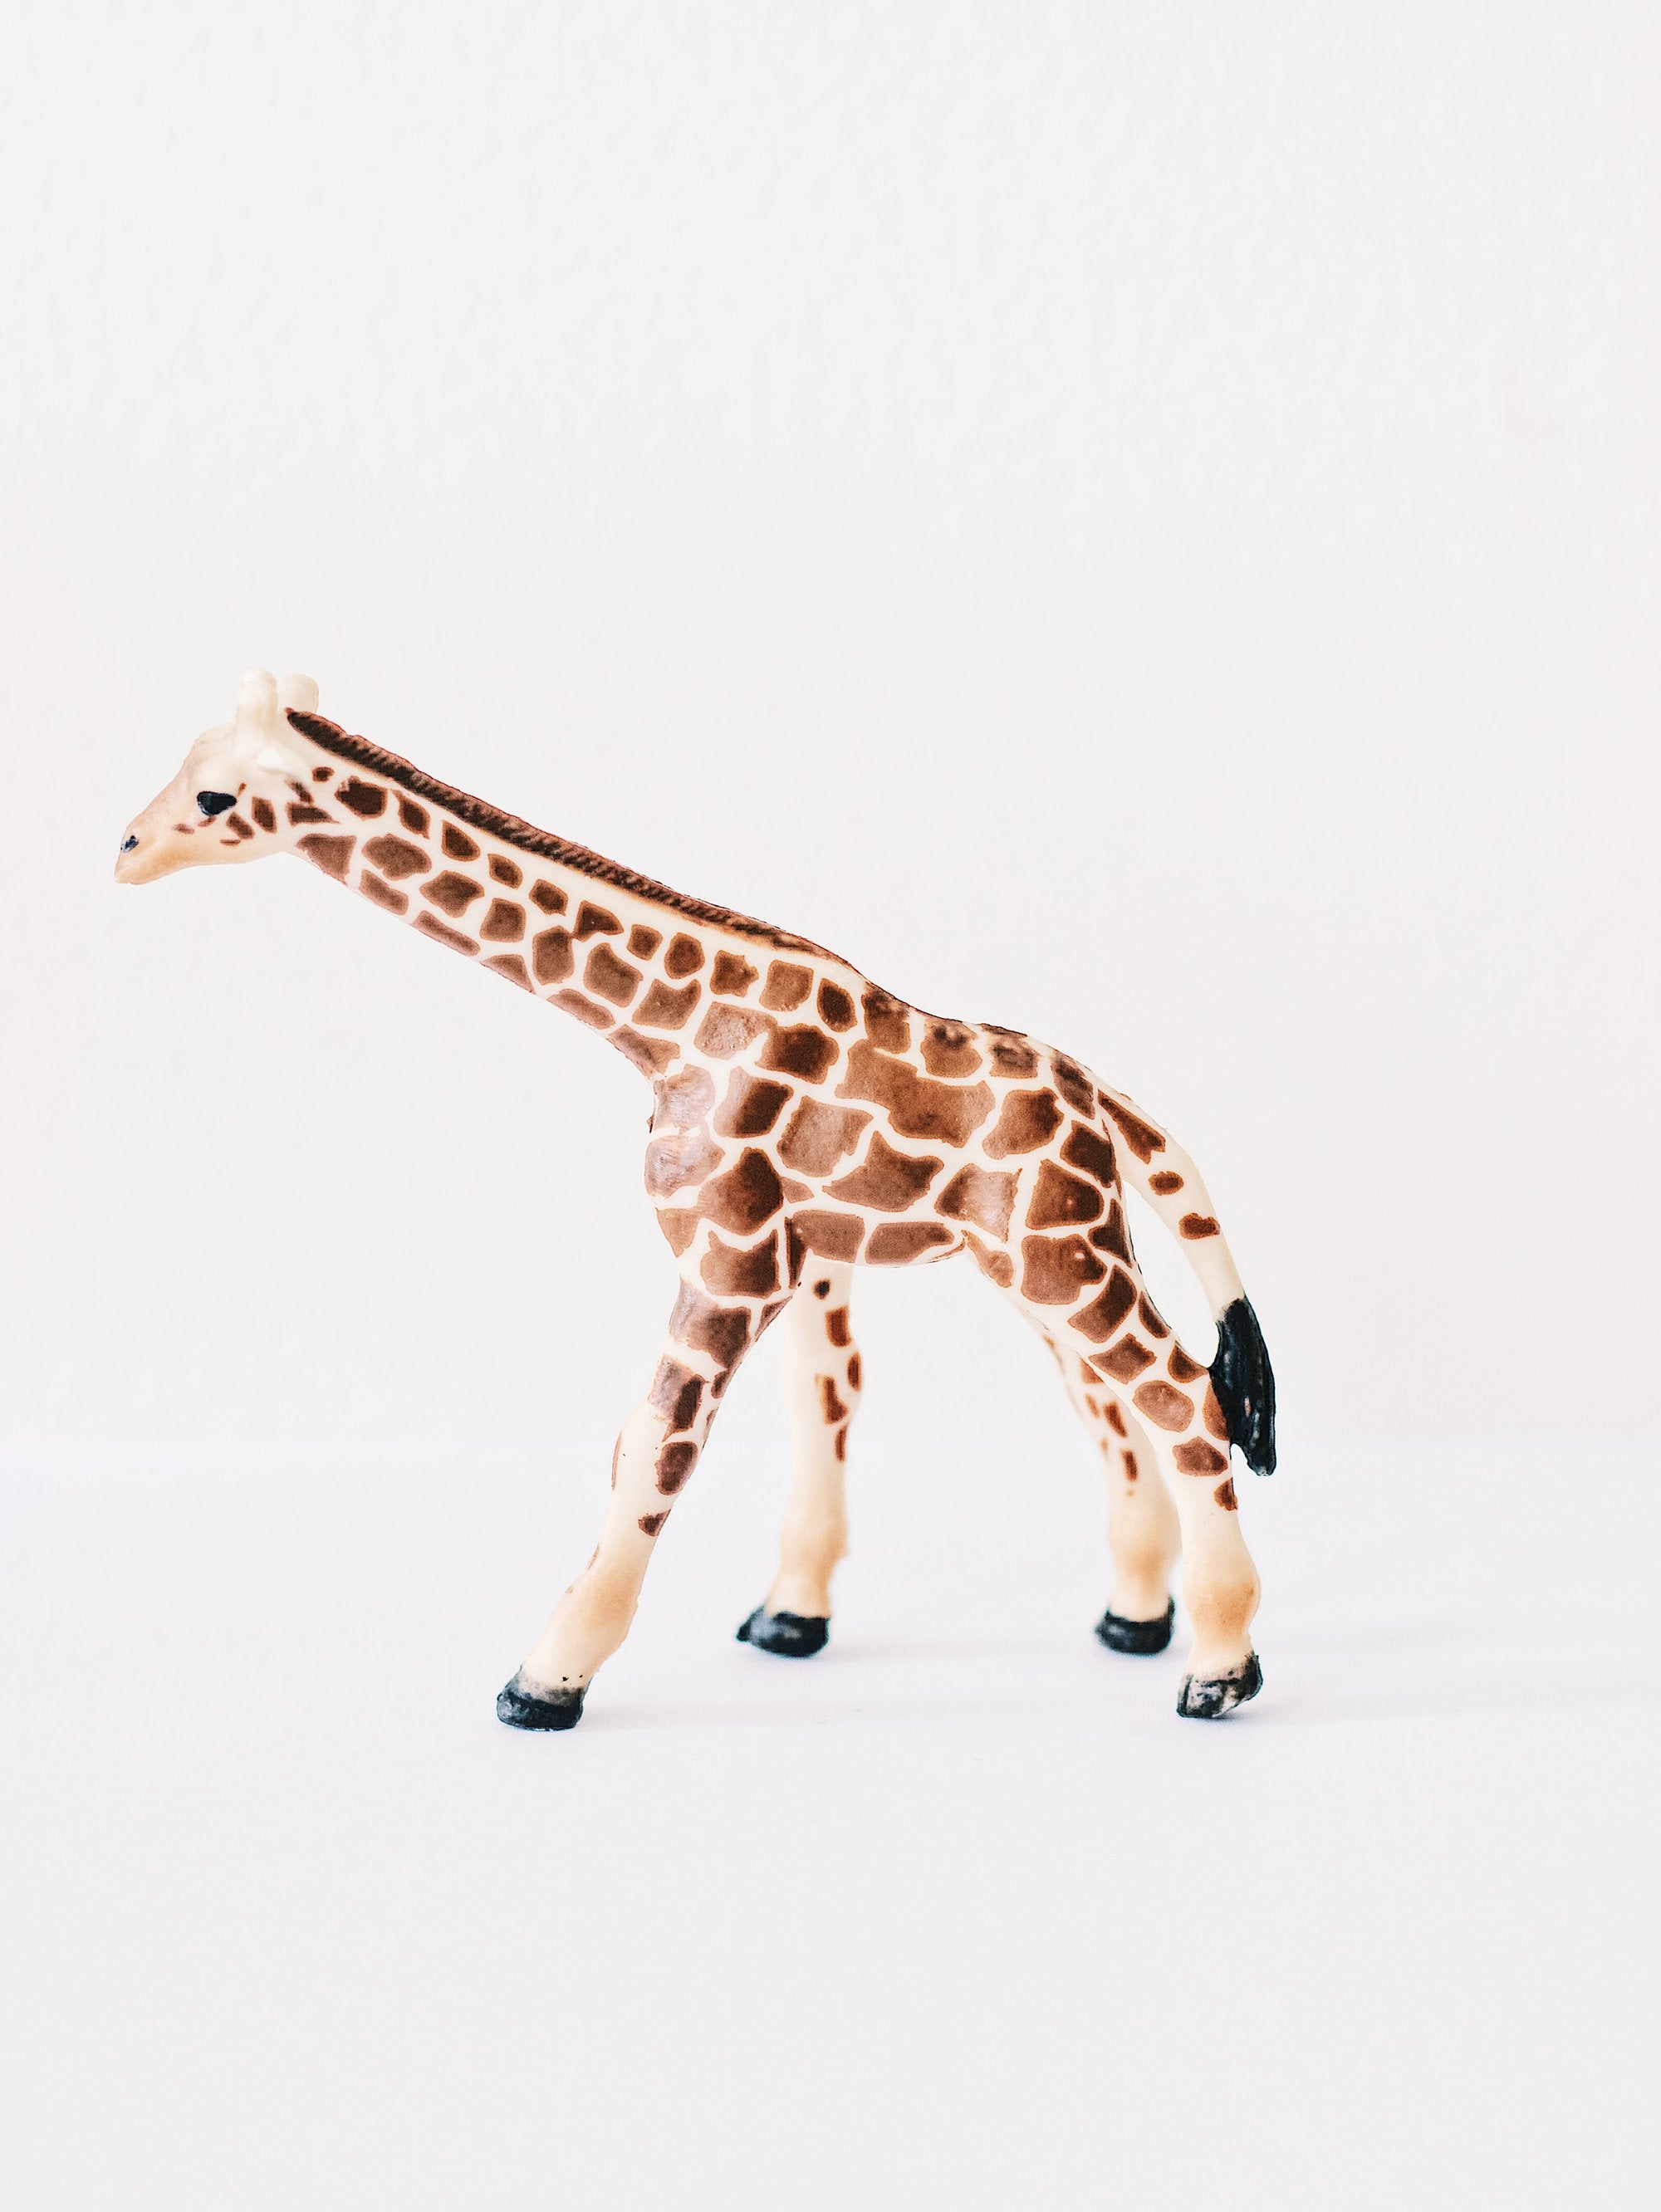 Minimalist Toy Giraffe - Fieldnotes Singapore